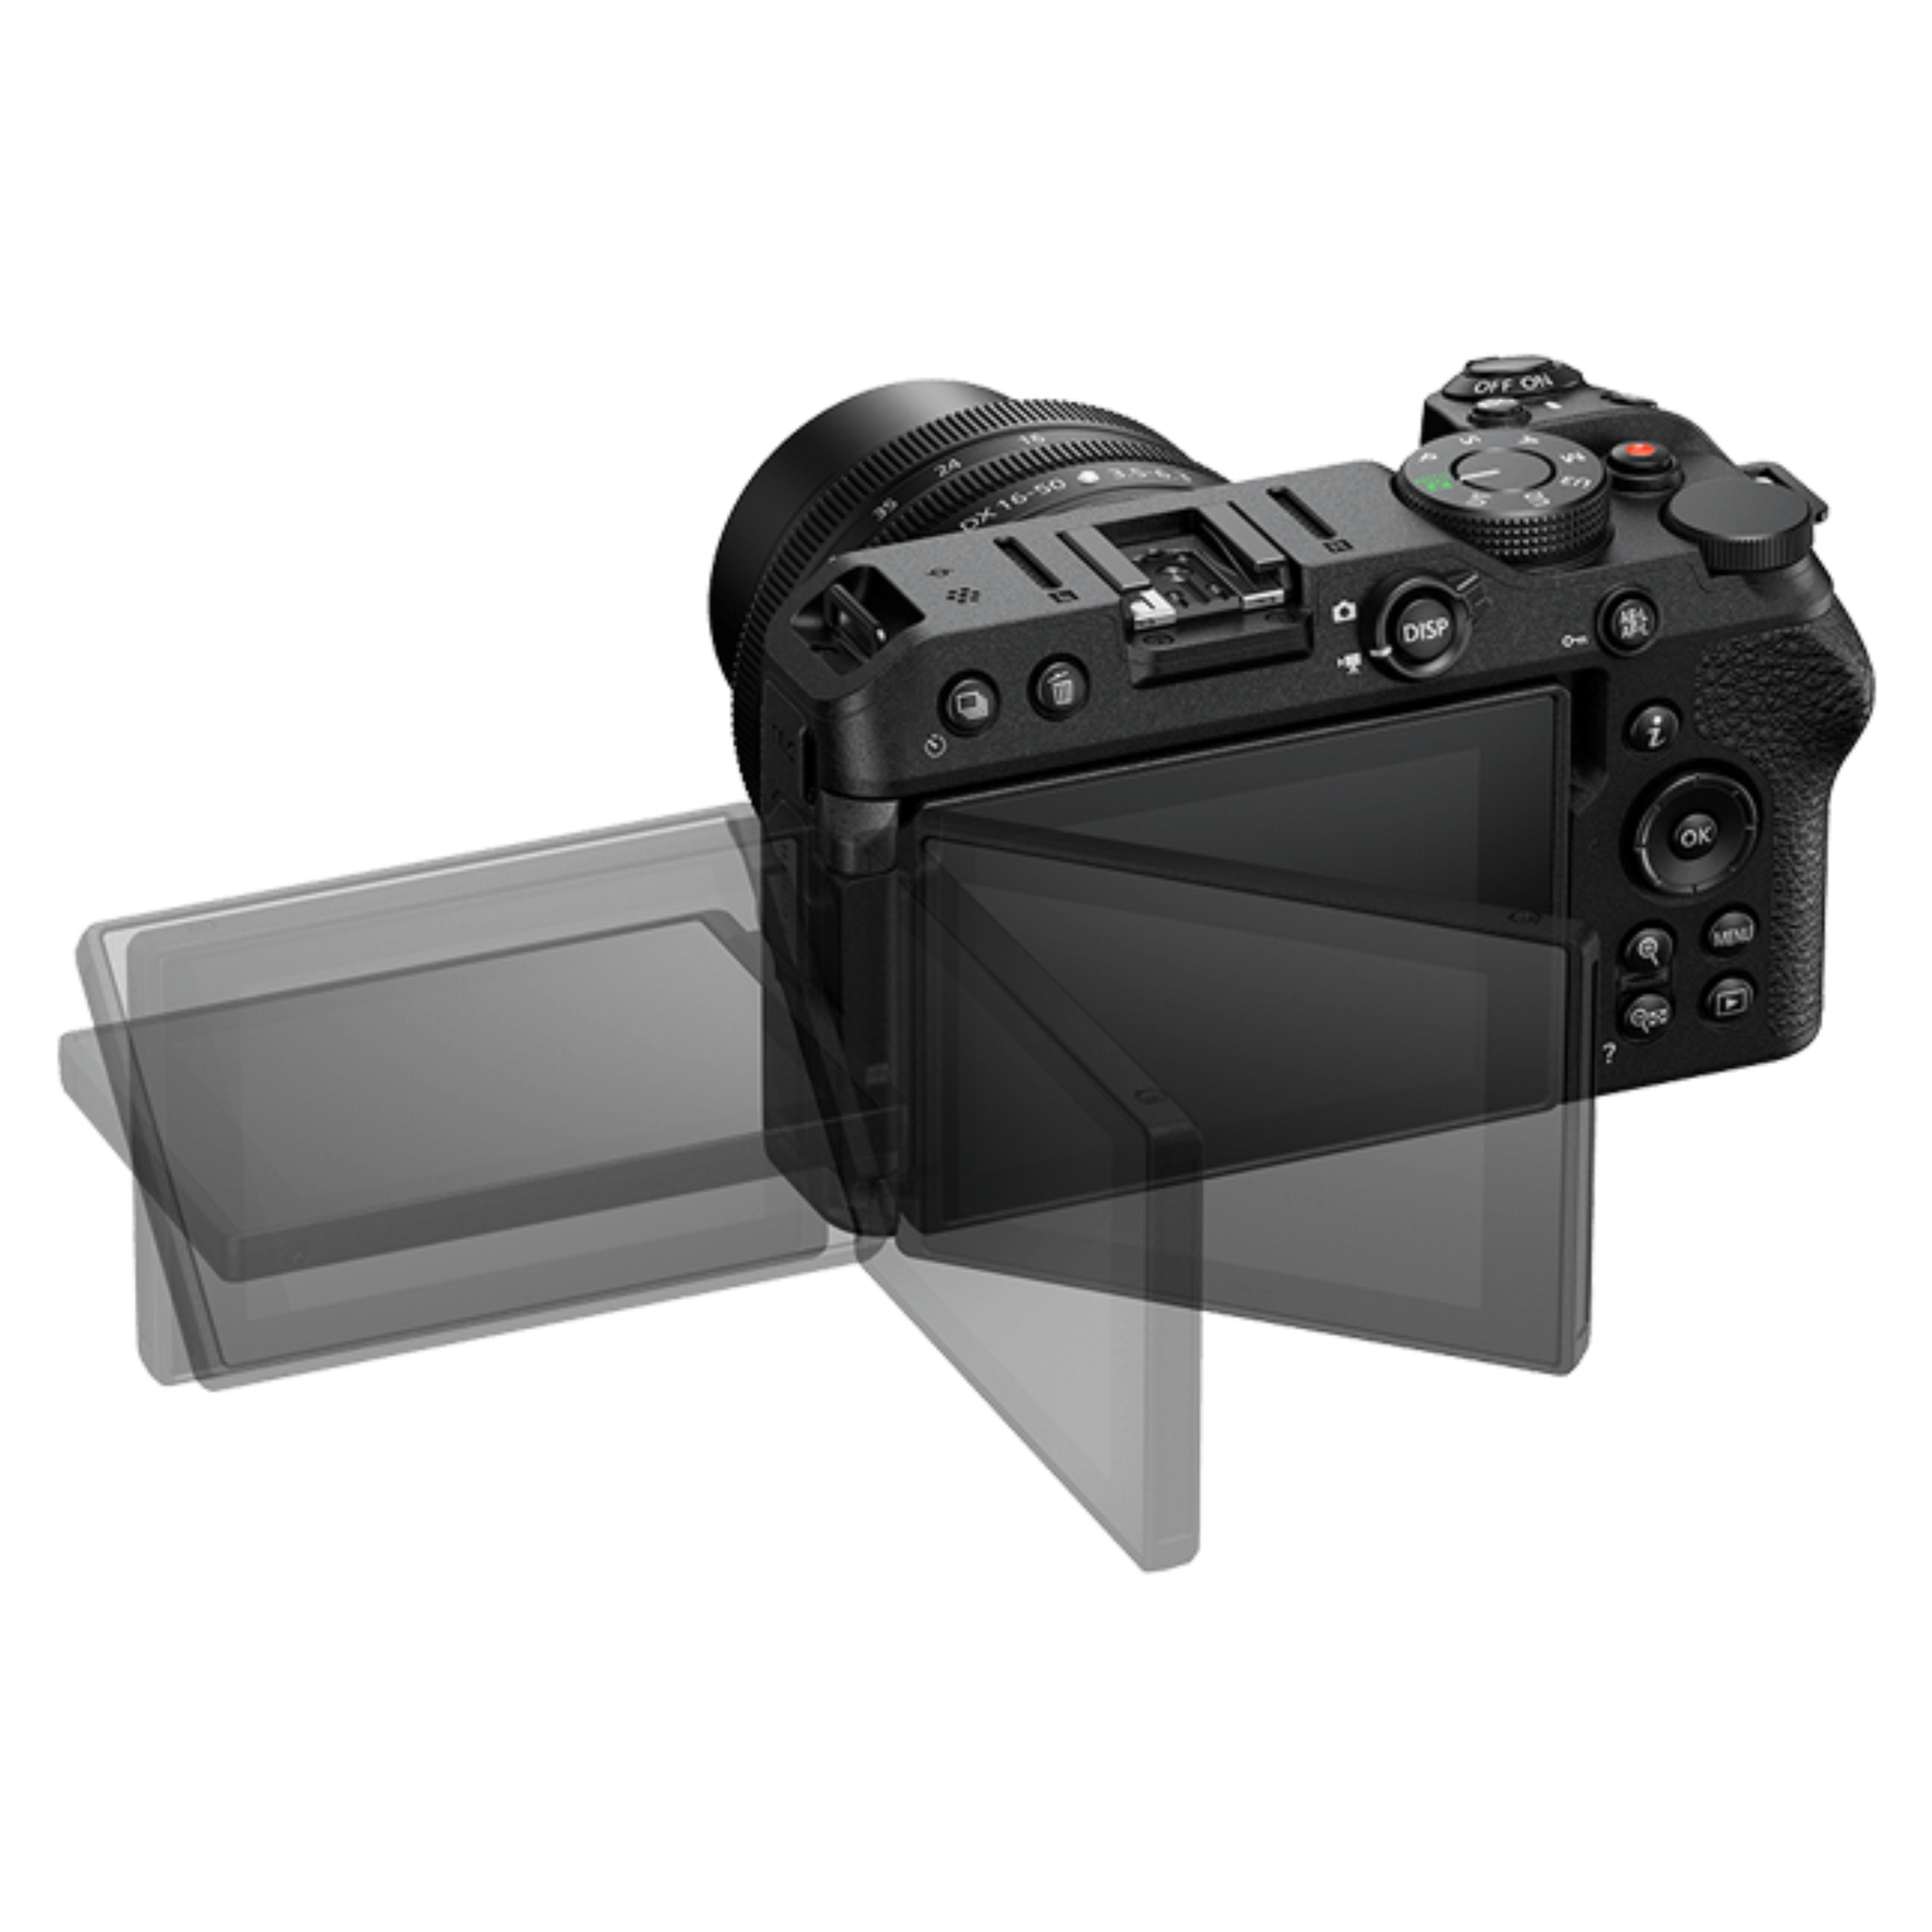 Nikon Z 30 Mirrorless Camera for Creators, Vlogging and Streaming-futuromic